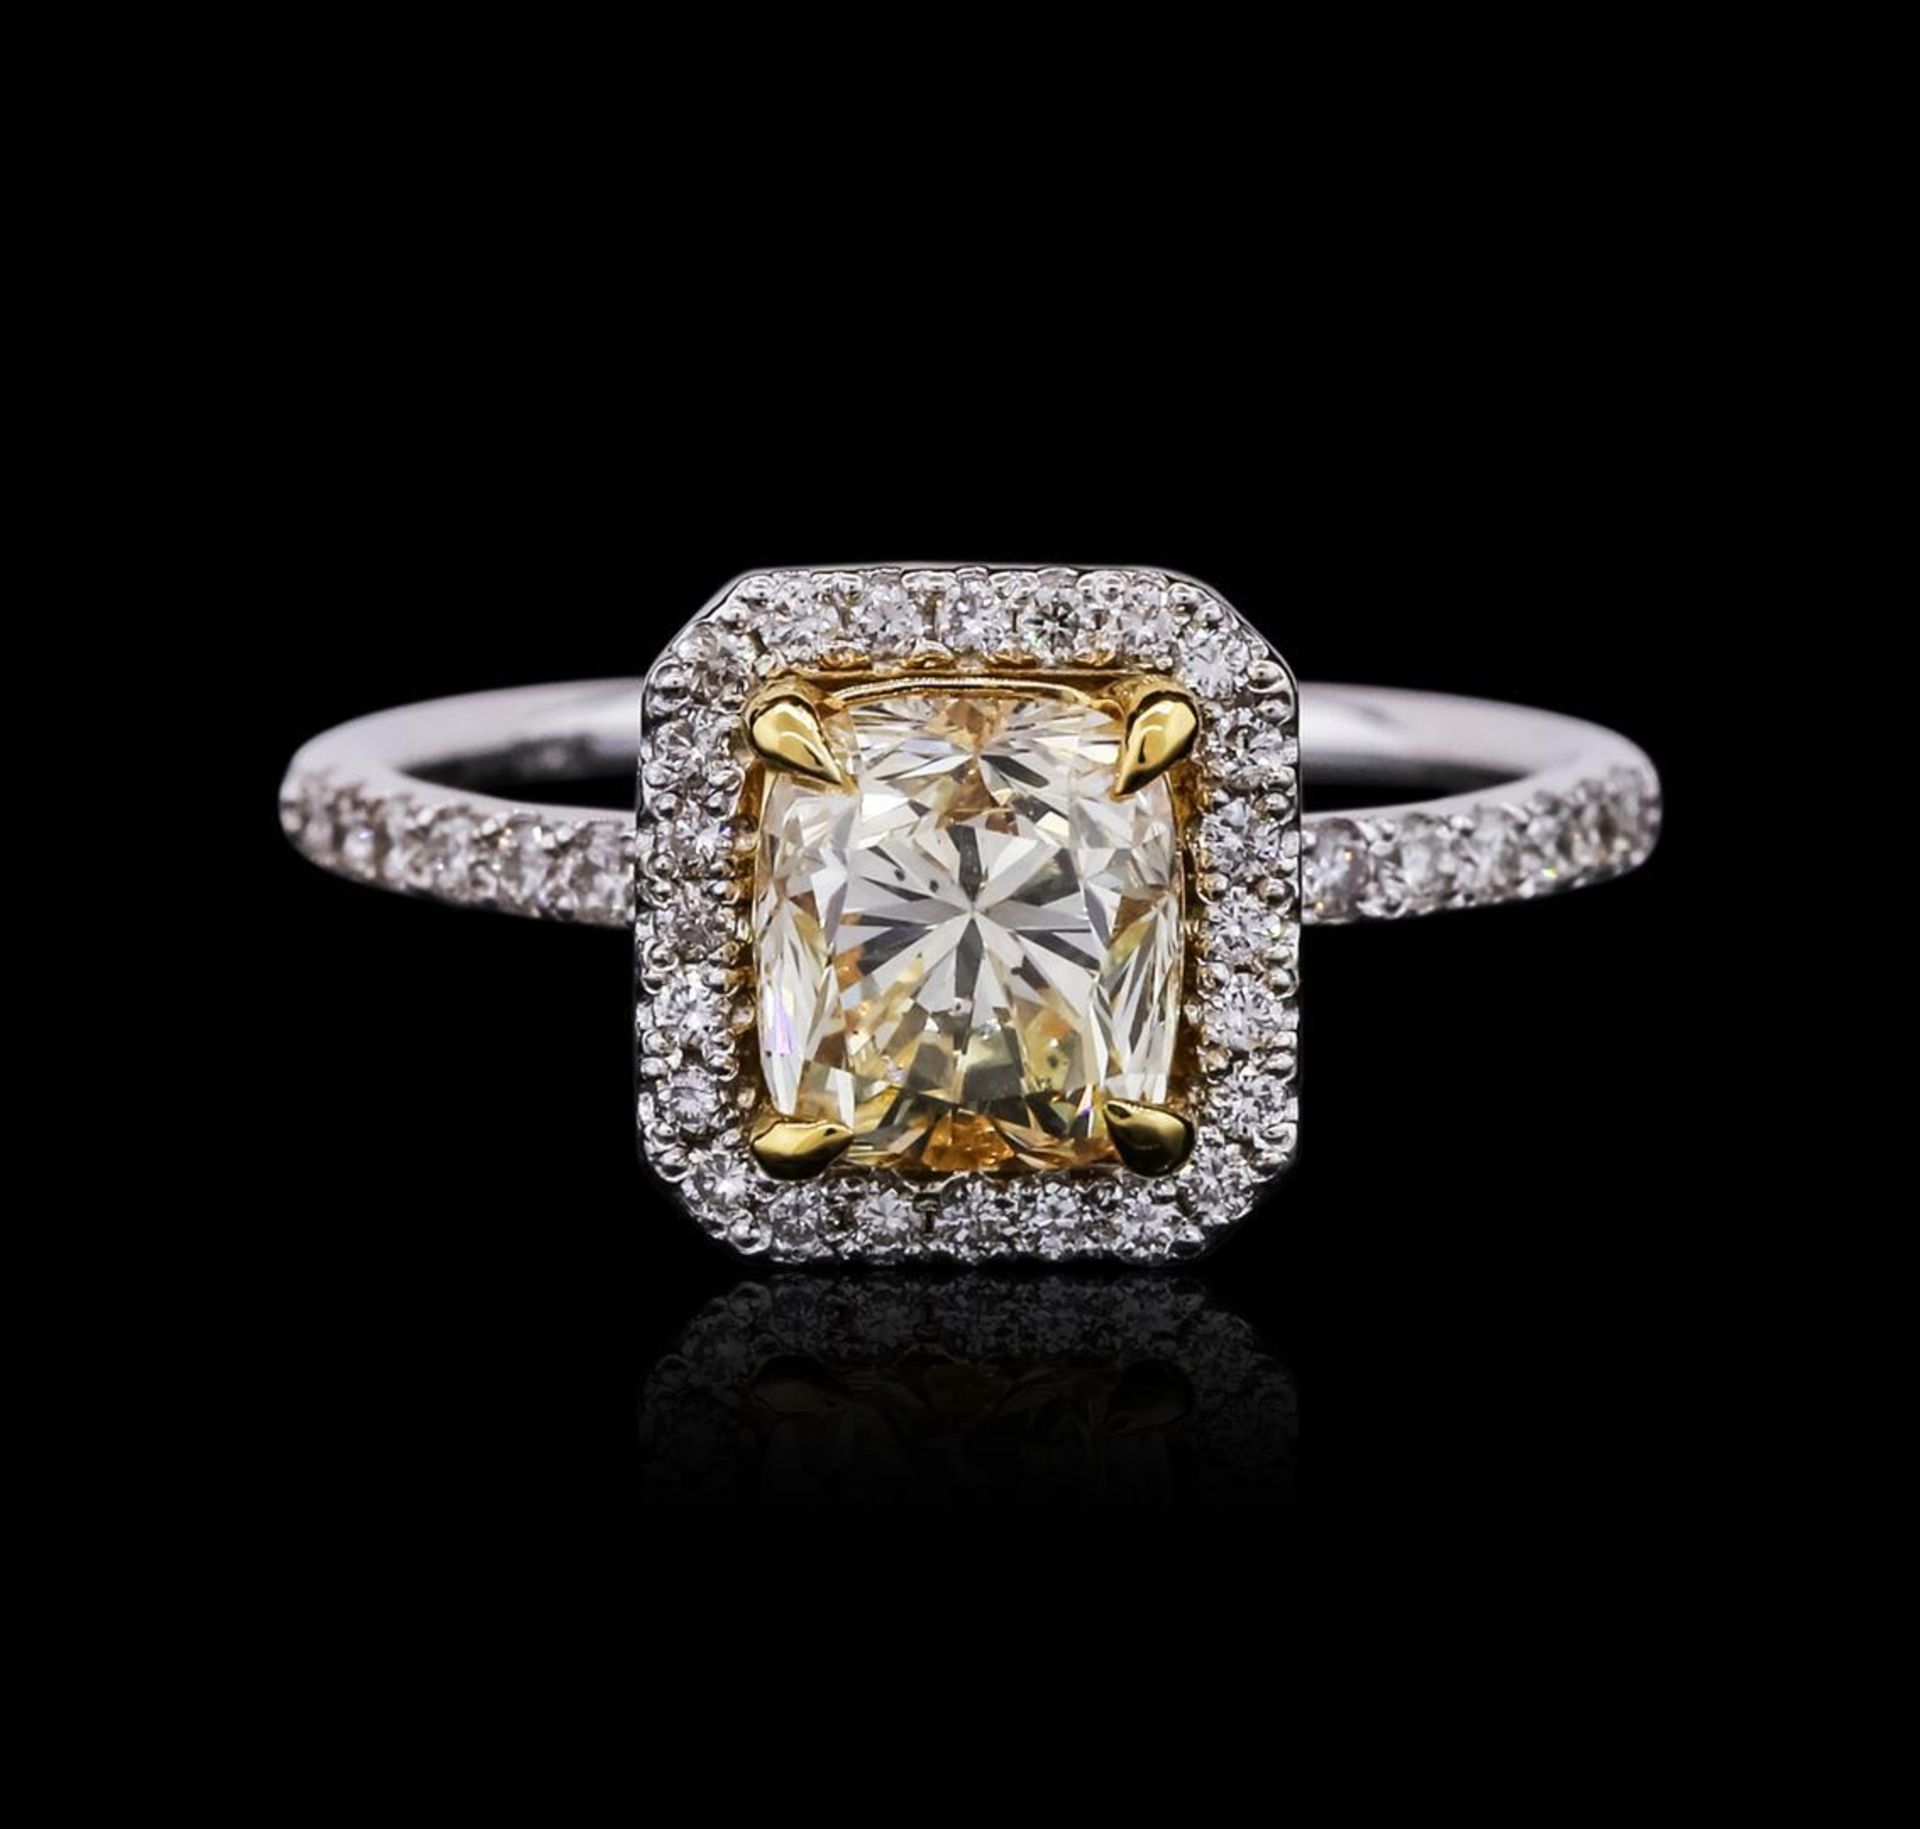 14KT White Gold 1.53ct SI-1/U-V Diamond Ring - Image 2 of 4